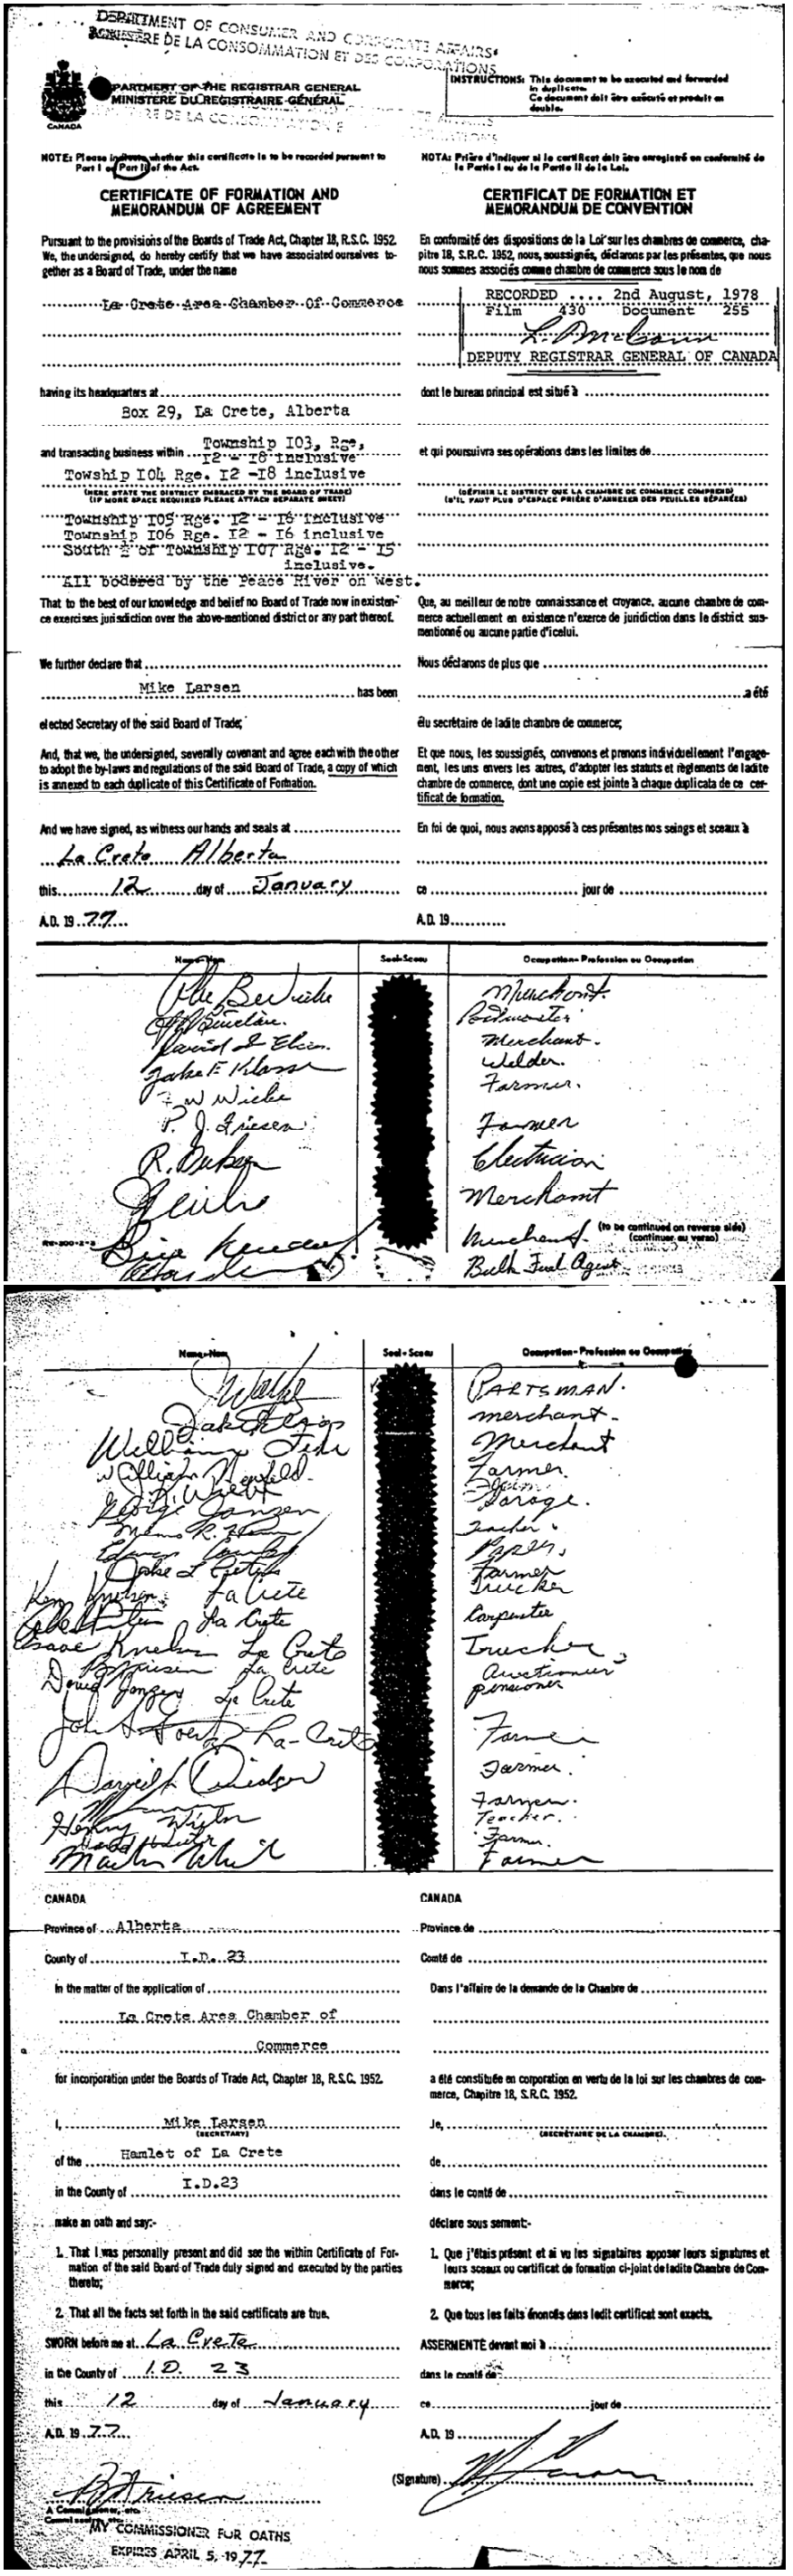 1978 Original Certificate of Formation (Certificate of Origin)